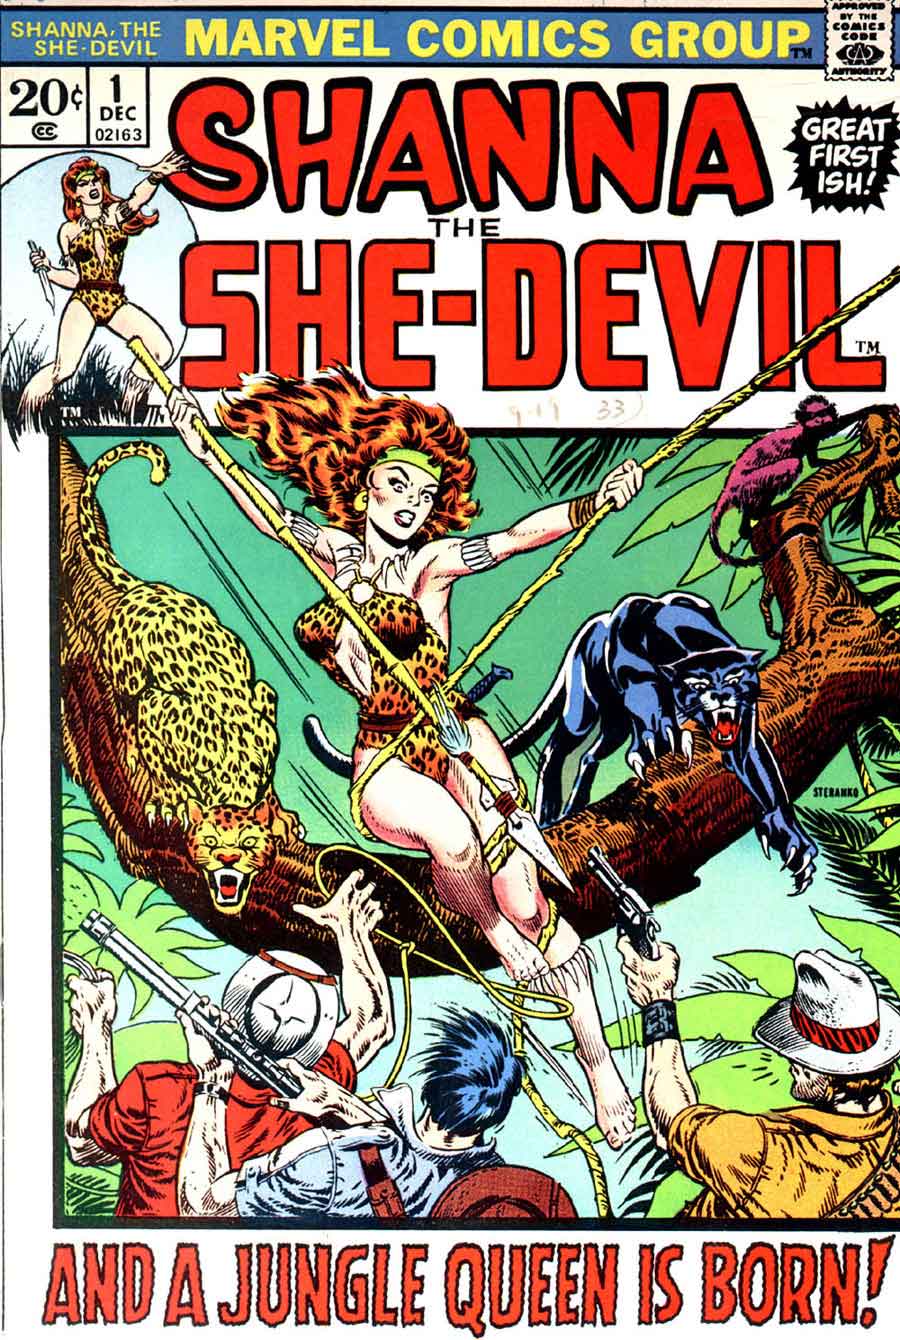 Shanna the She-Devil v1 #1 marvel 1970s bronze age comic book cover art by Jim Steranko